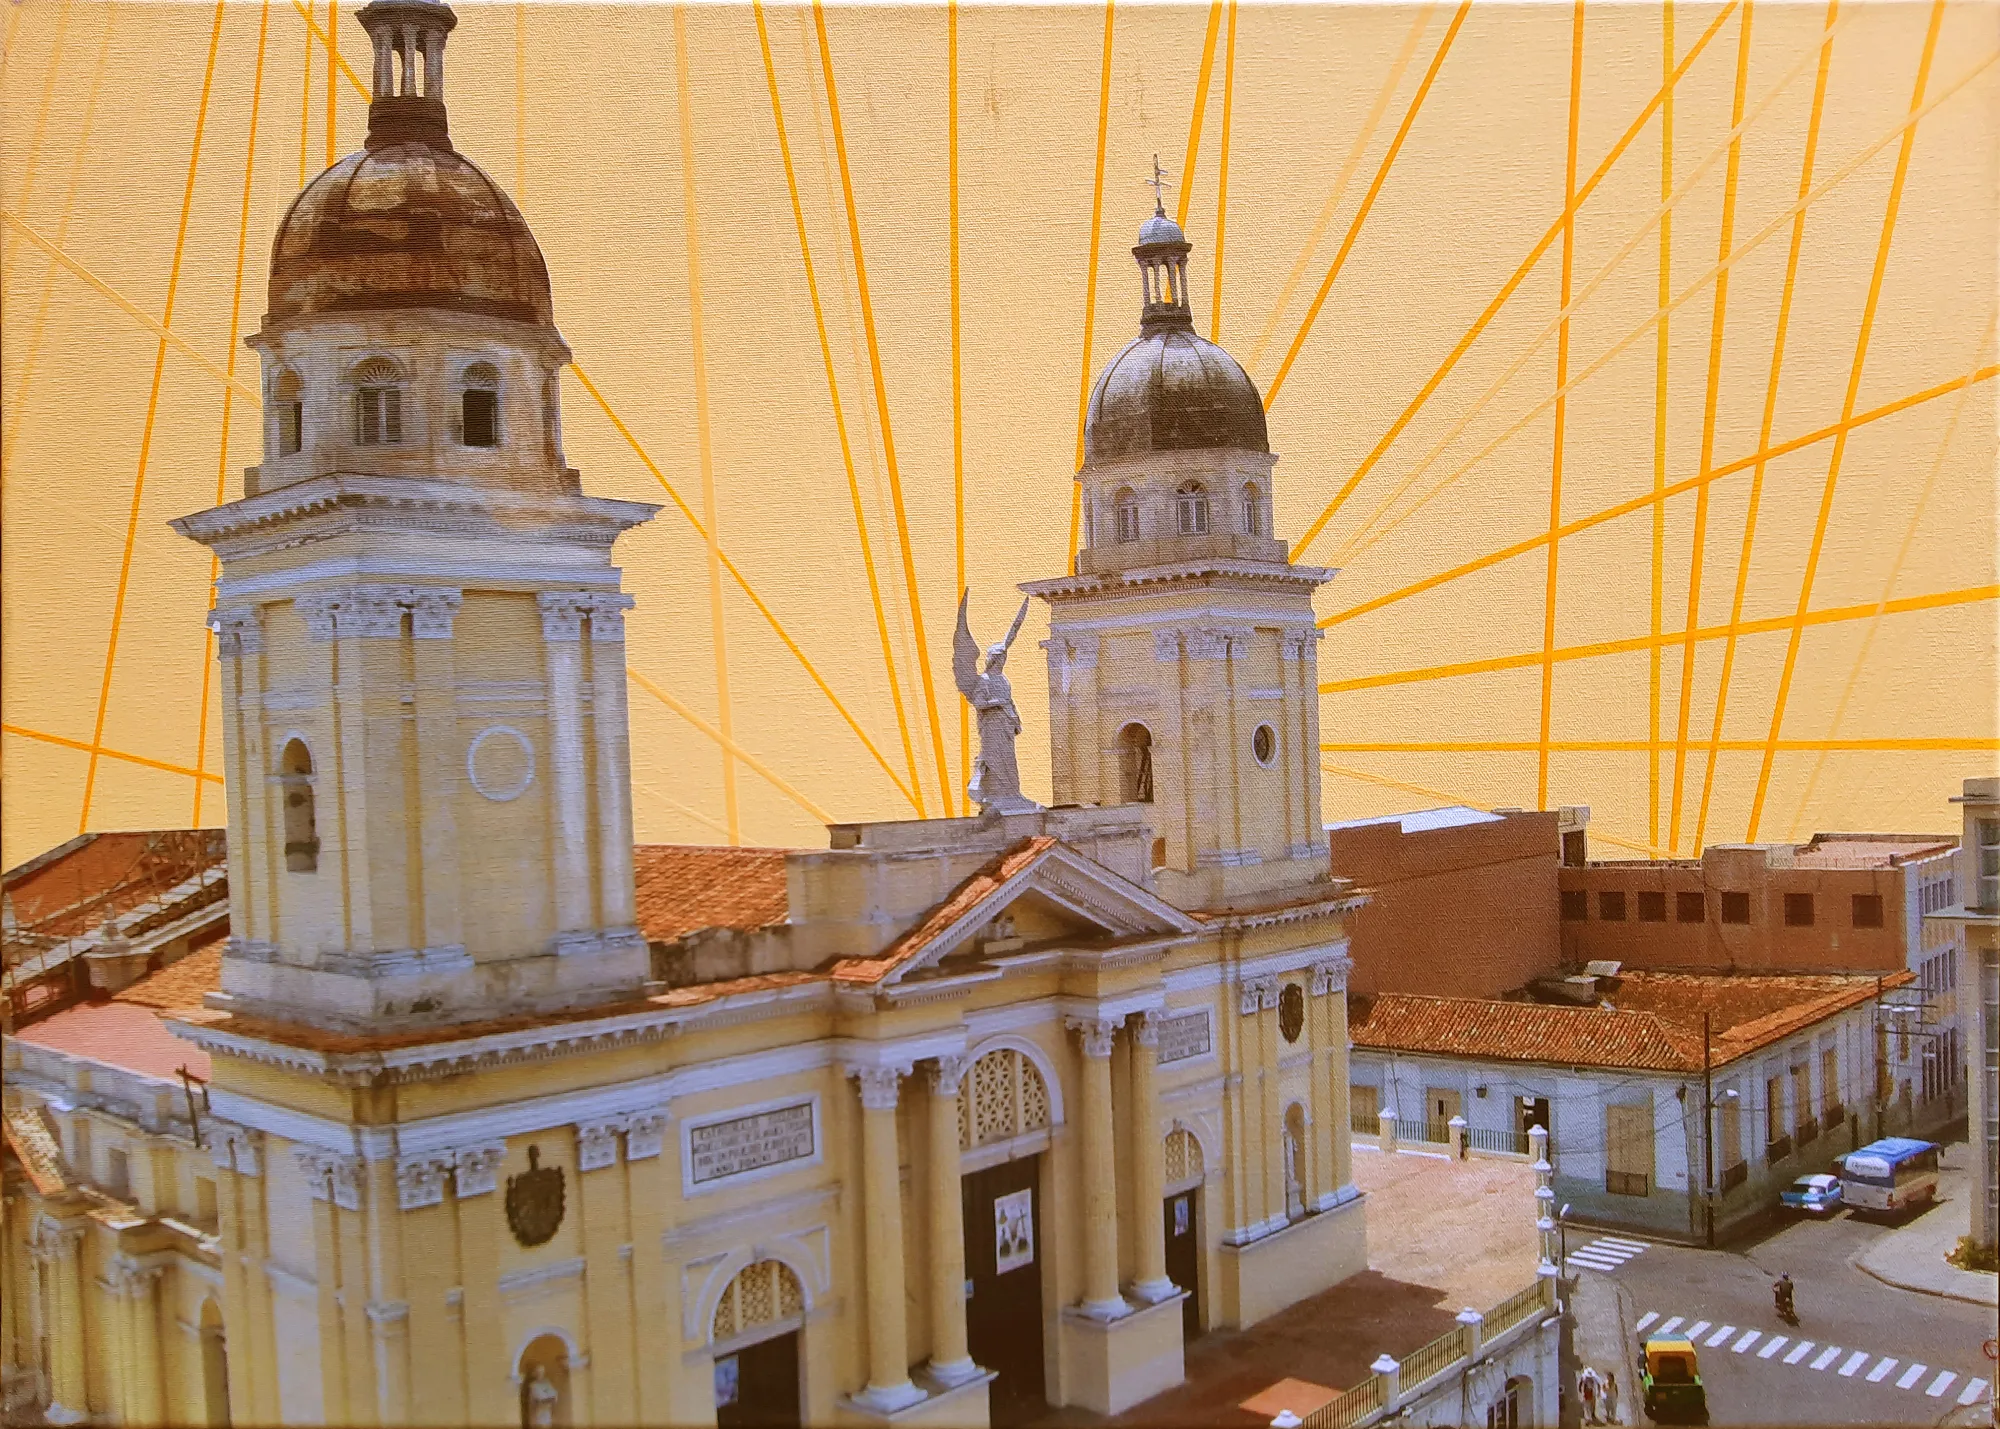 Featured image for “Catedral de la Asuncion Cuba”